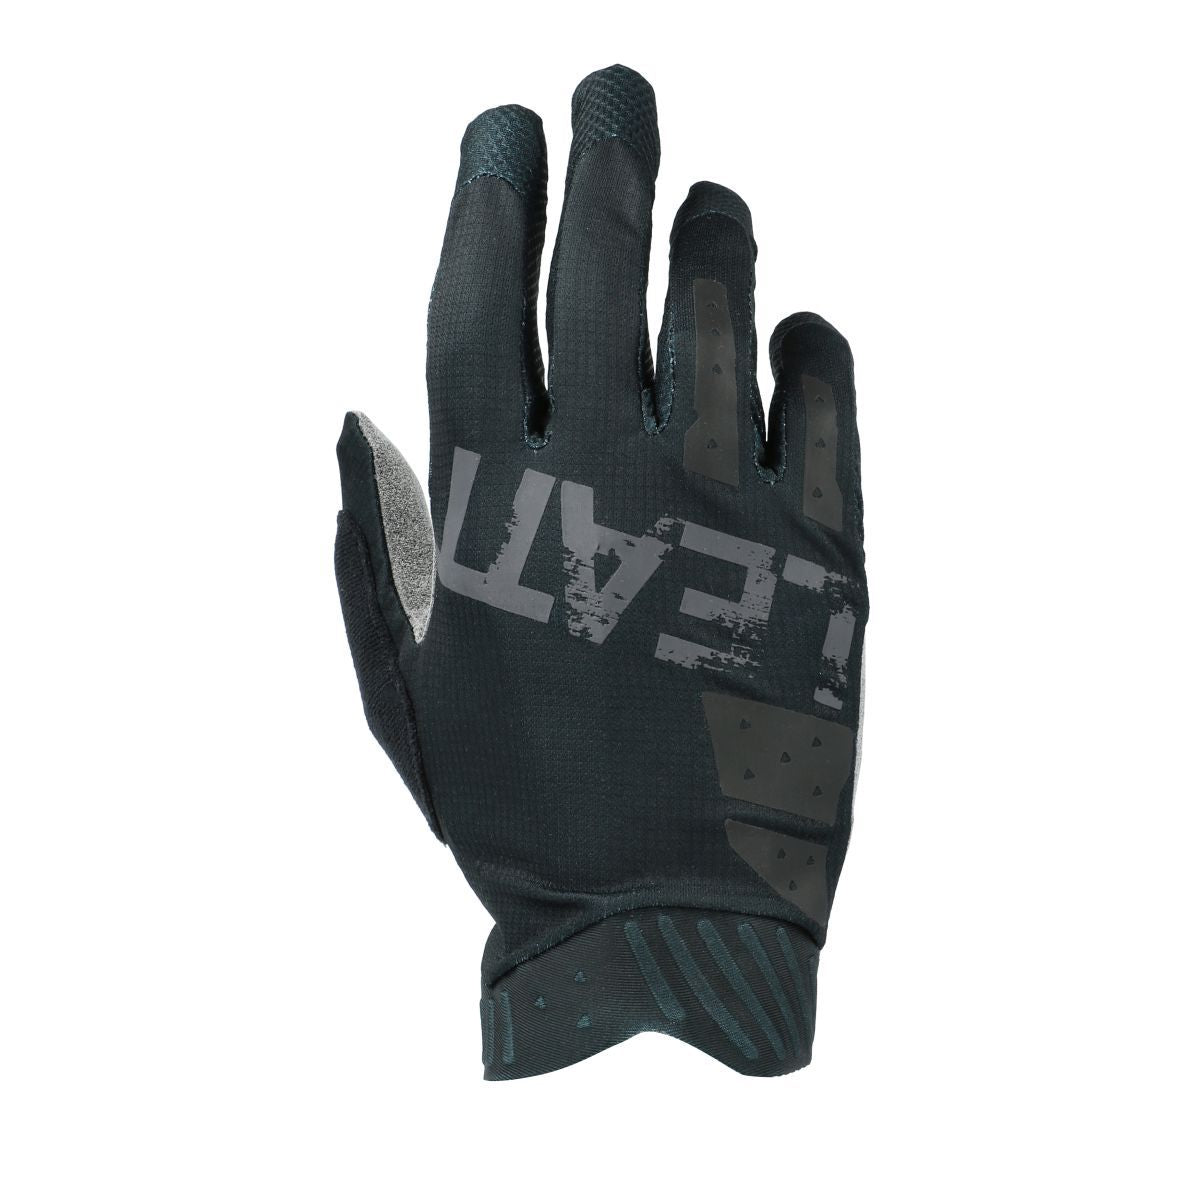 Leatt Protection Glove Mtb 1.0 Gripr Black M in Black